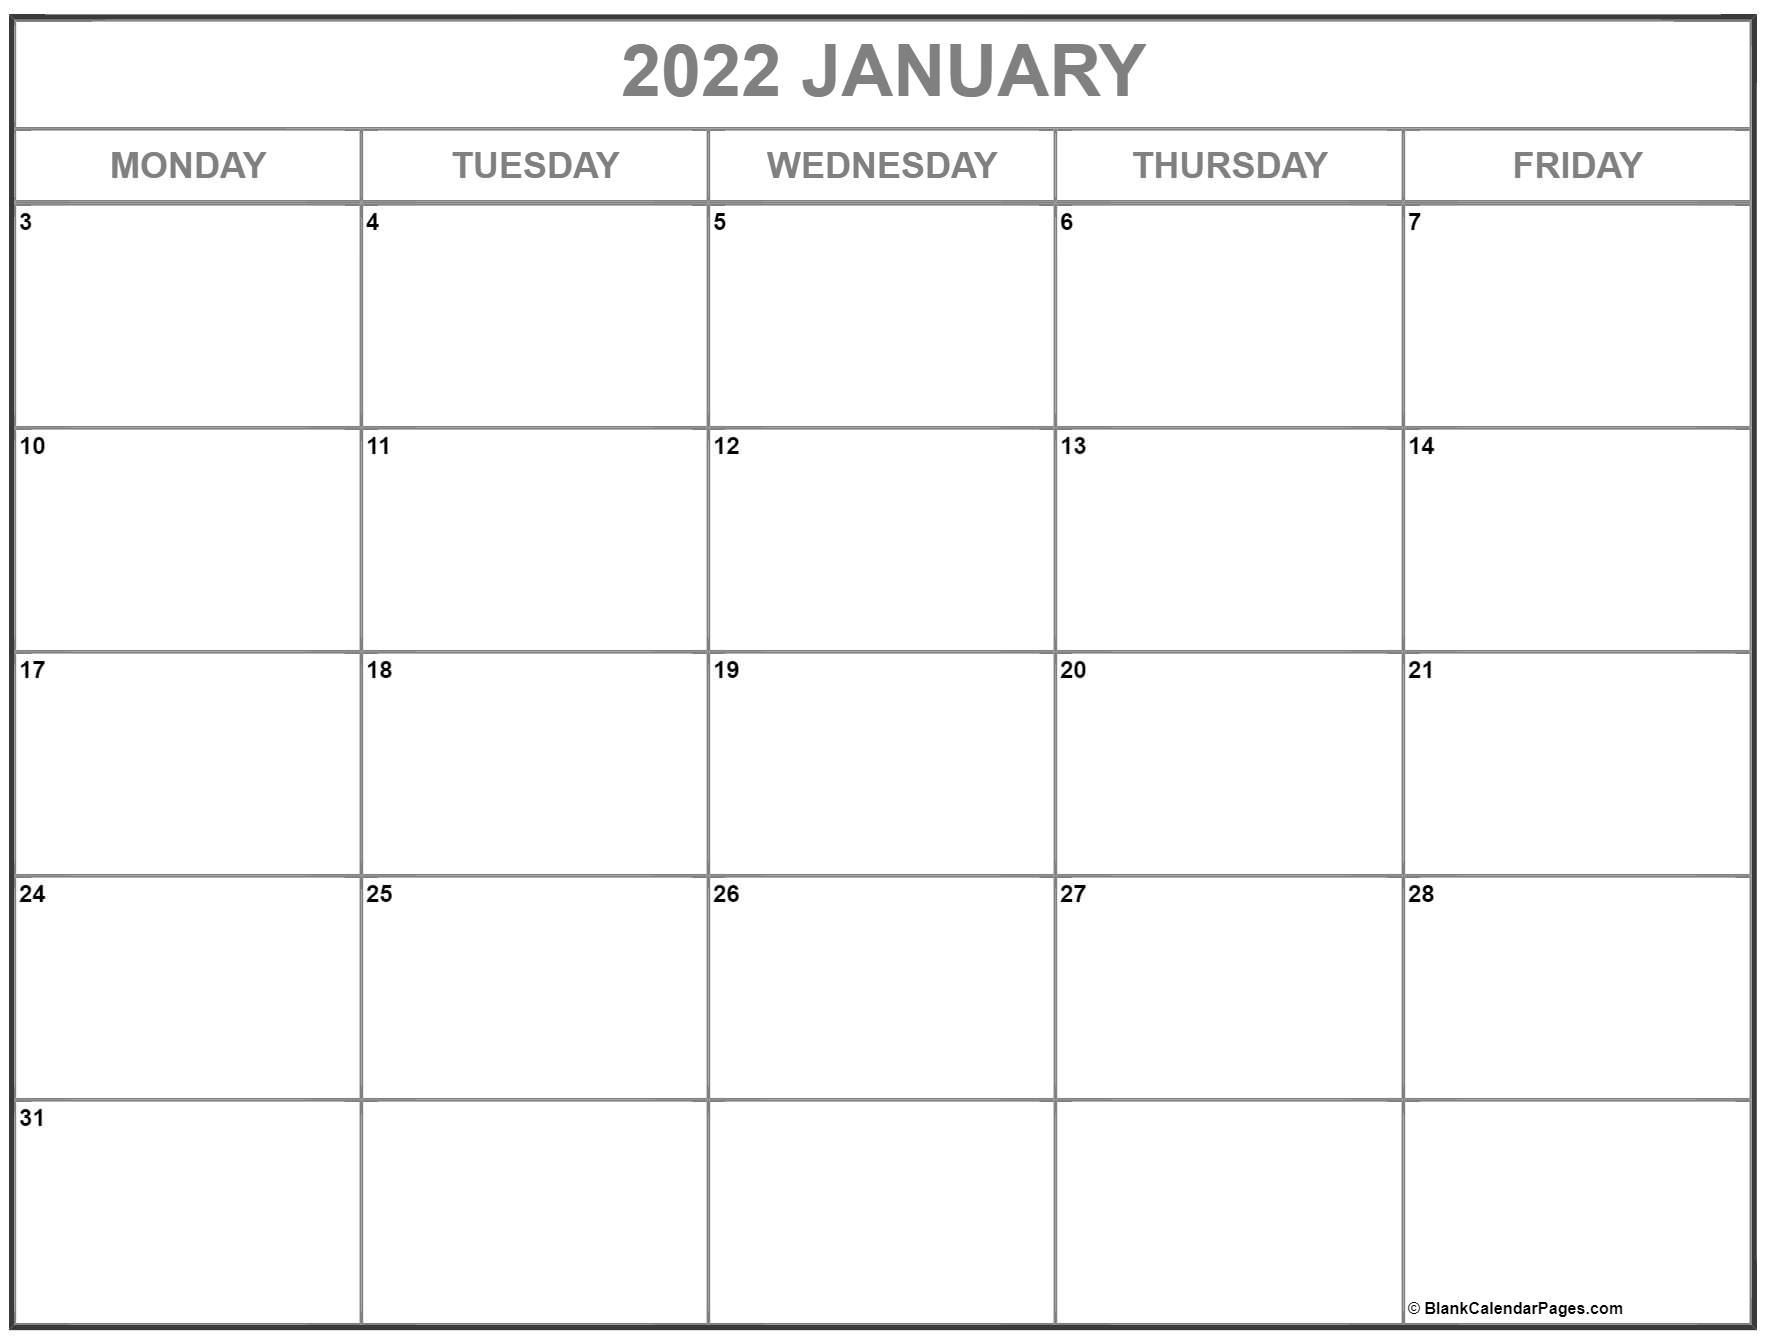 January 2022 Monday Calendar | Monday To Sunday